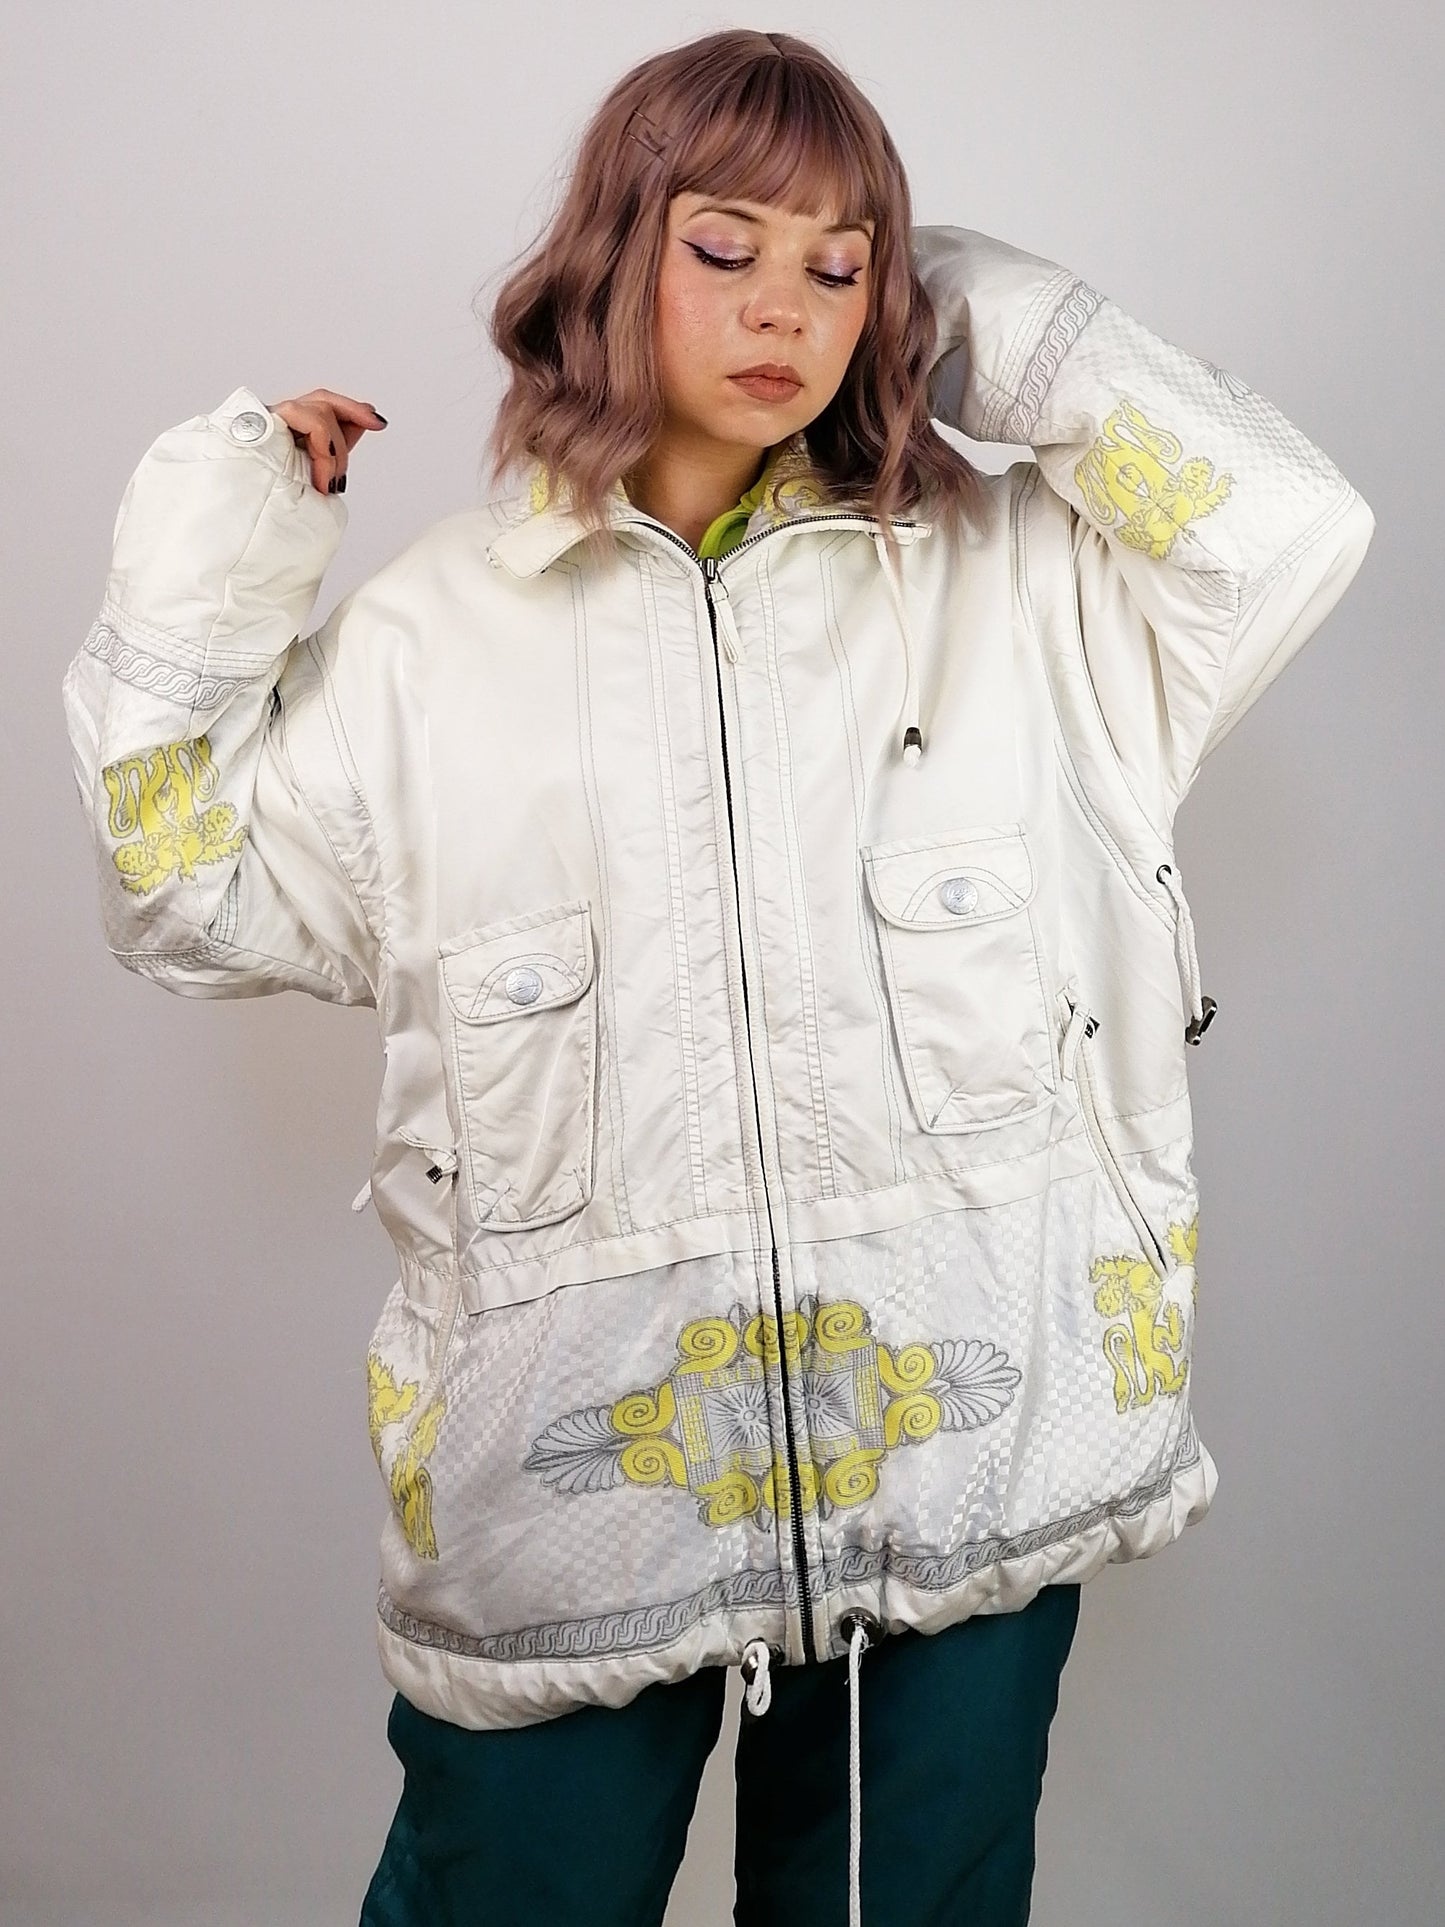 KILLTEC Winter Ski Jacket Detachable Sleeves